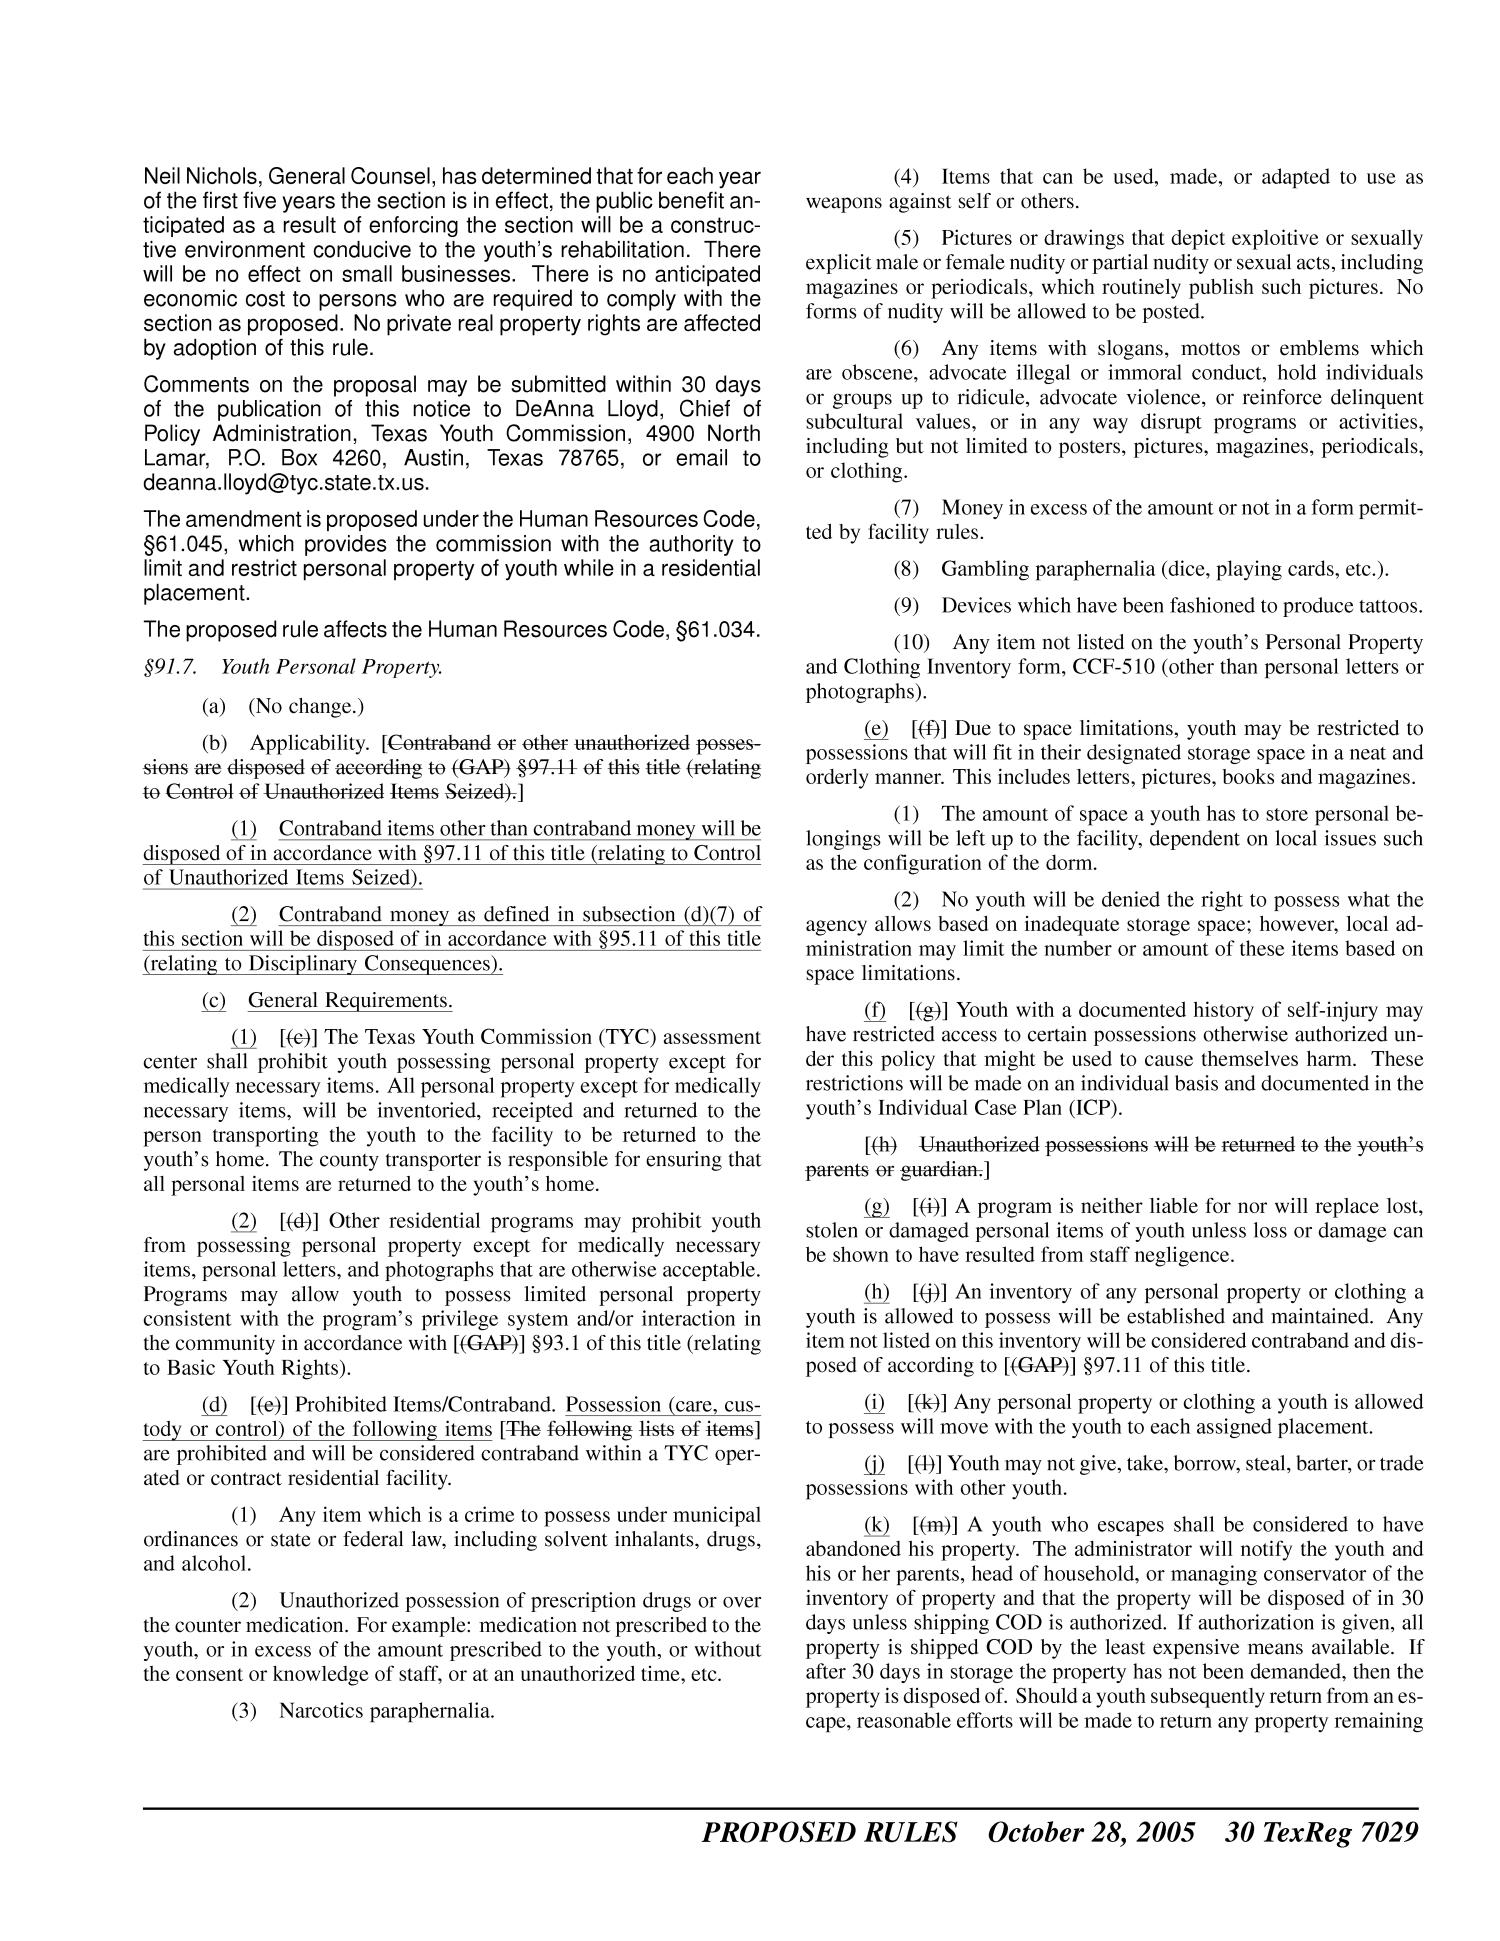 Texas Register, Volume 30, Number 43, Pages 6973-7094, October 28, 2005
                                                
                                                    7029
                                                